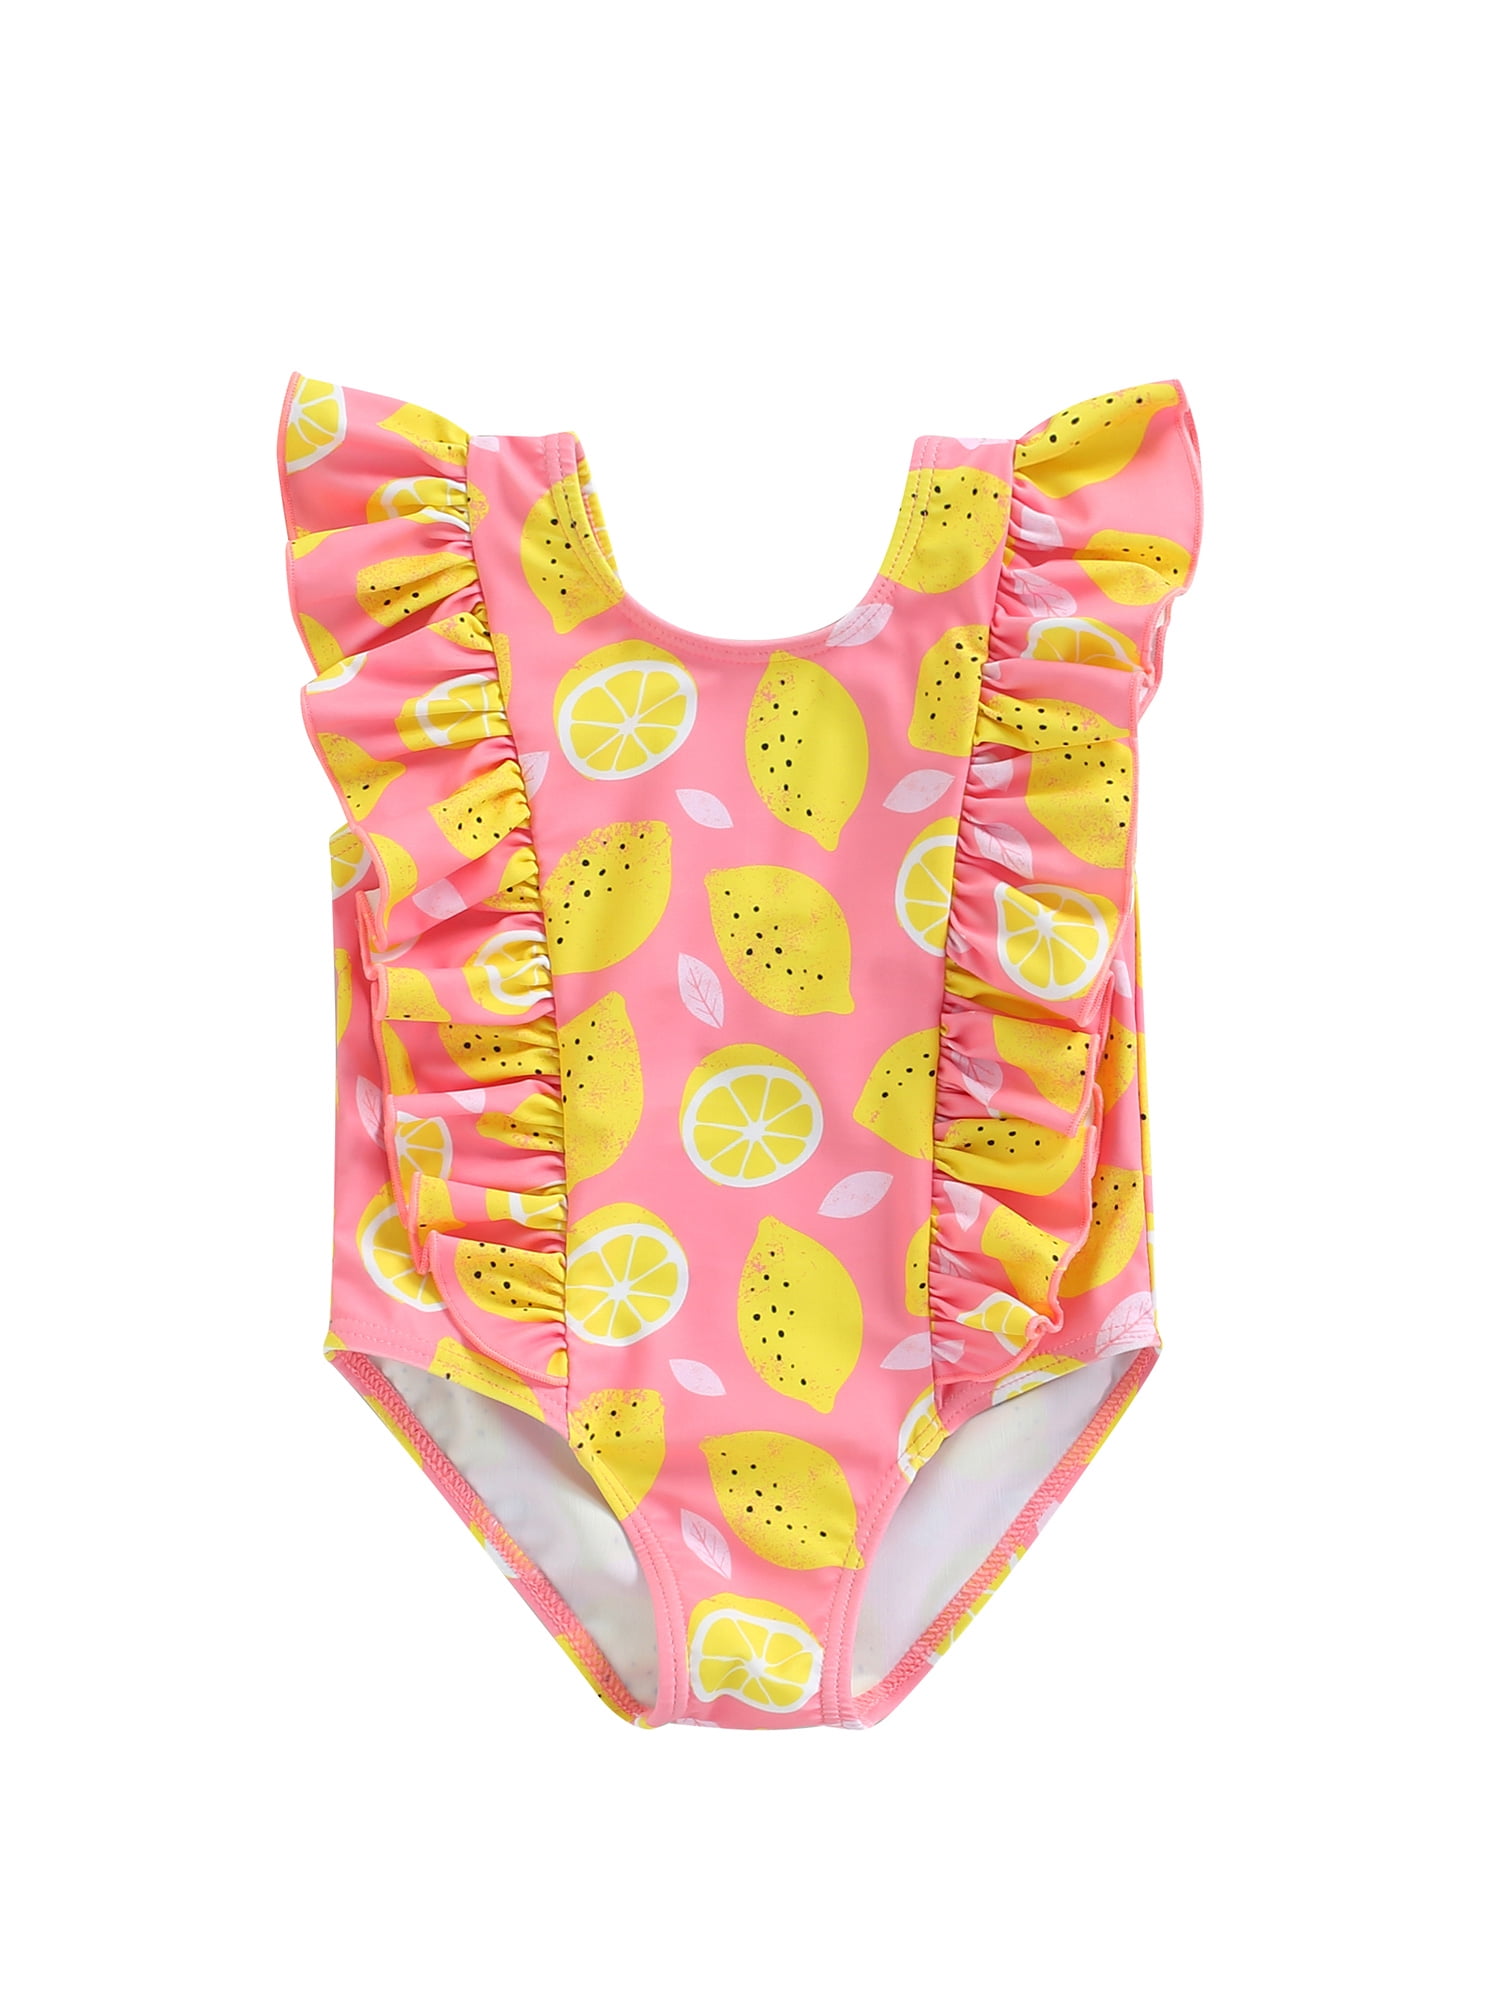 YOUNGER TREE Newborn Baby Girl Swimsuit Infant Ruffle Swimwear Summer Beach One Piece Bathing Suit 